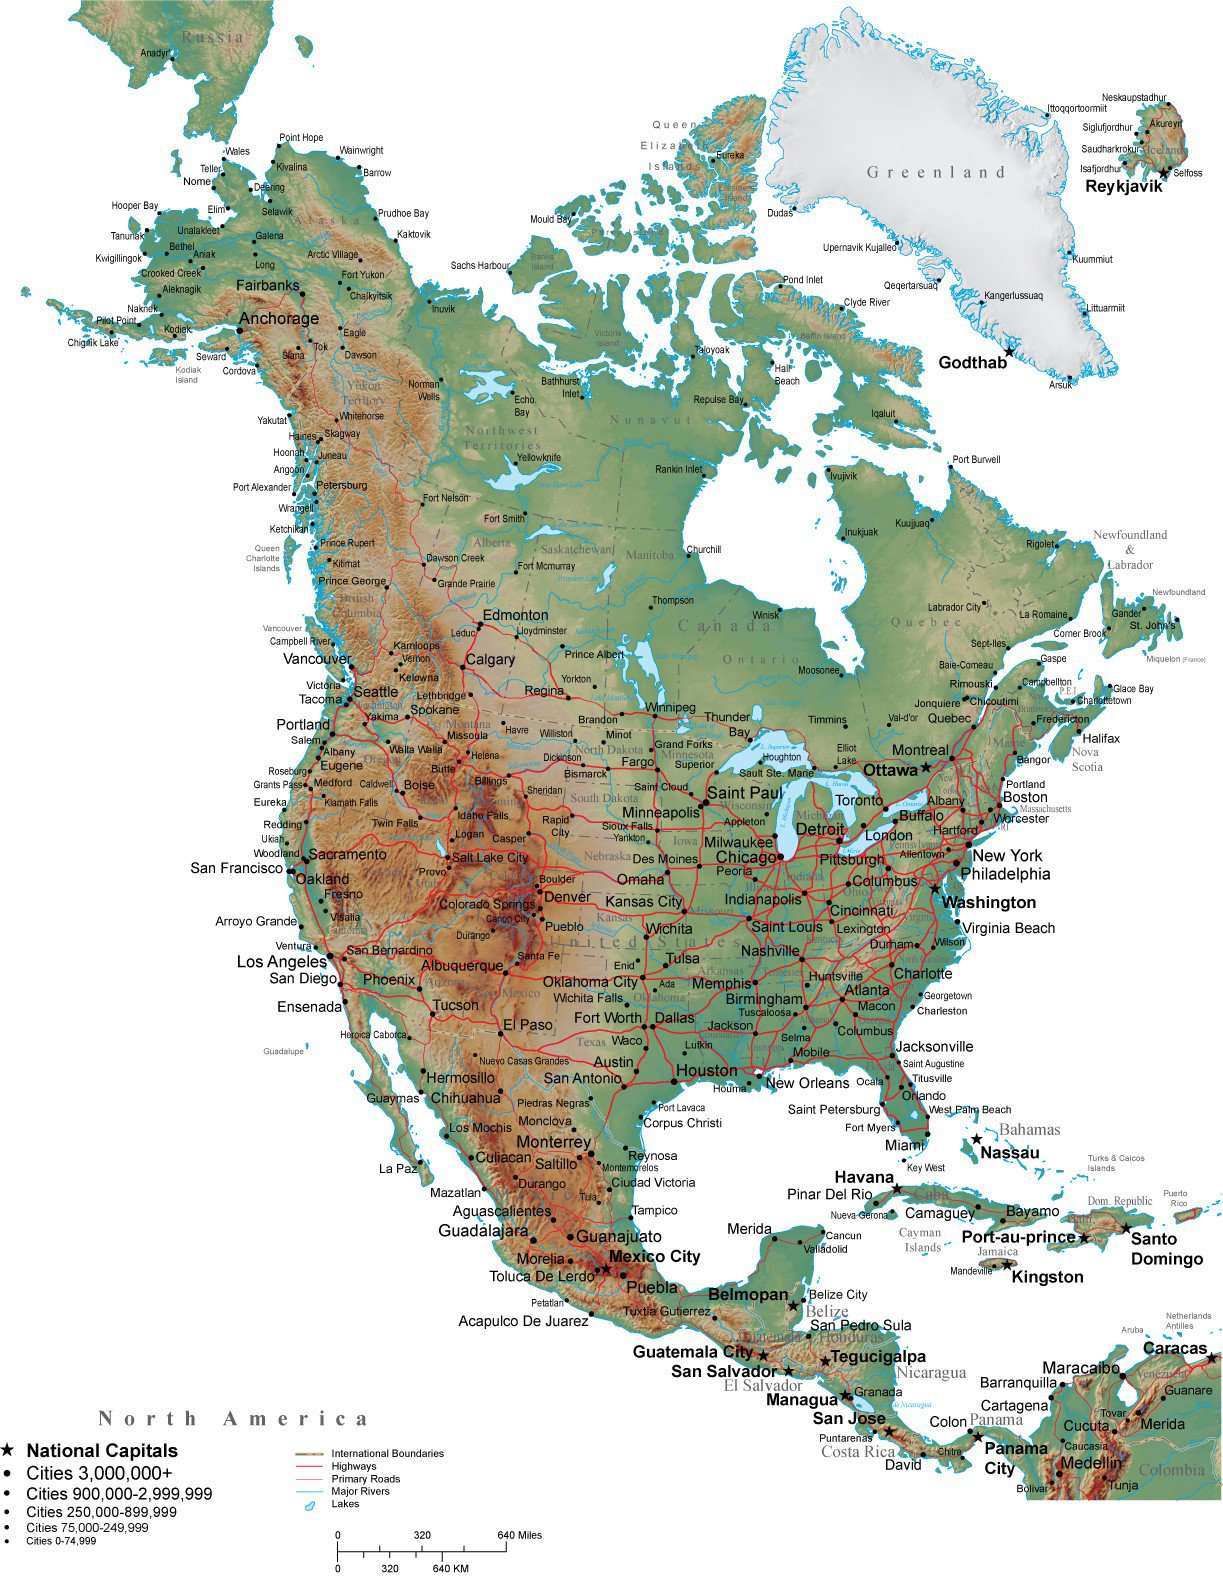 North America Terrain Map In Adobe Illustrator Vector Format With